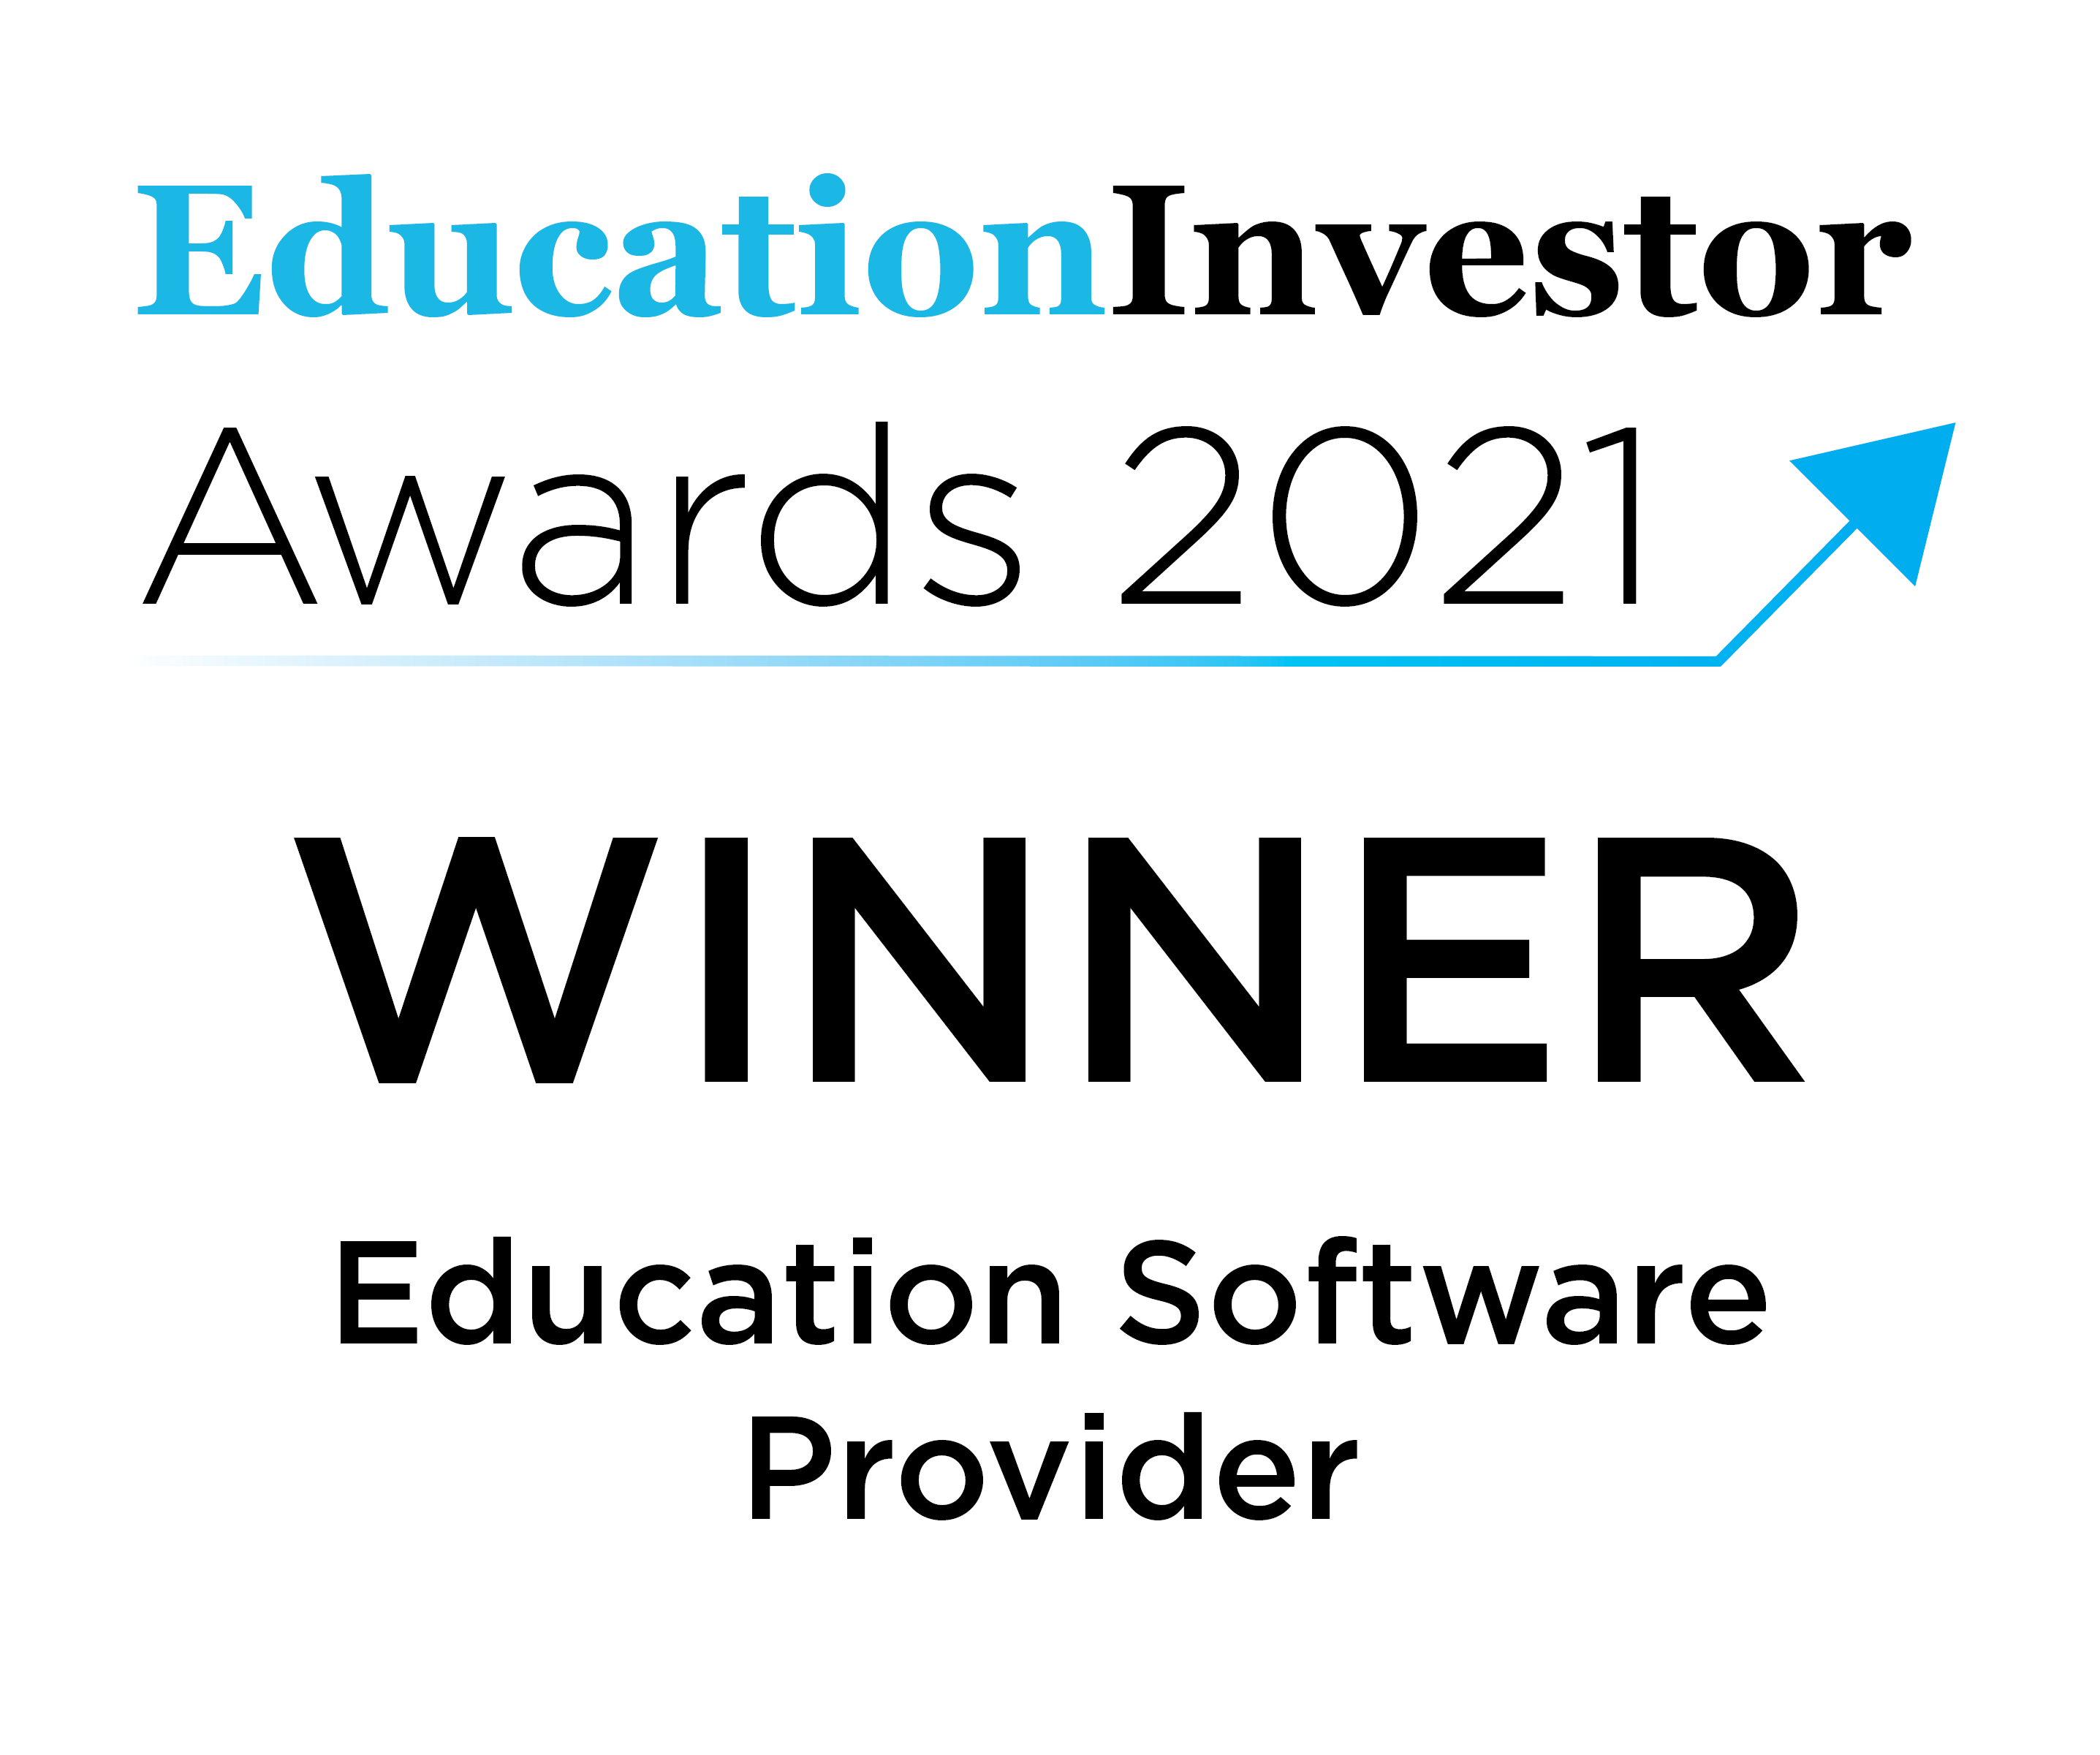 eiawards2021-winner-education-software-provider-square-white-logo